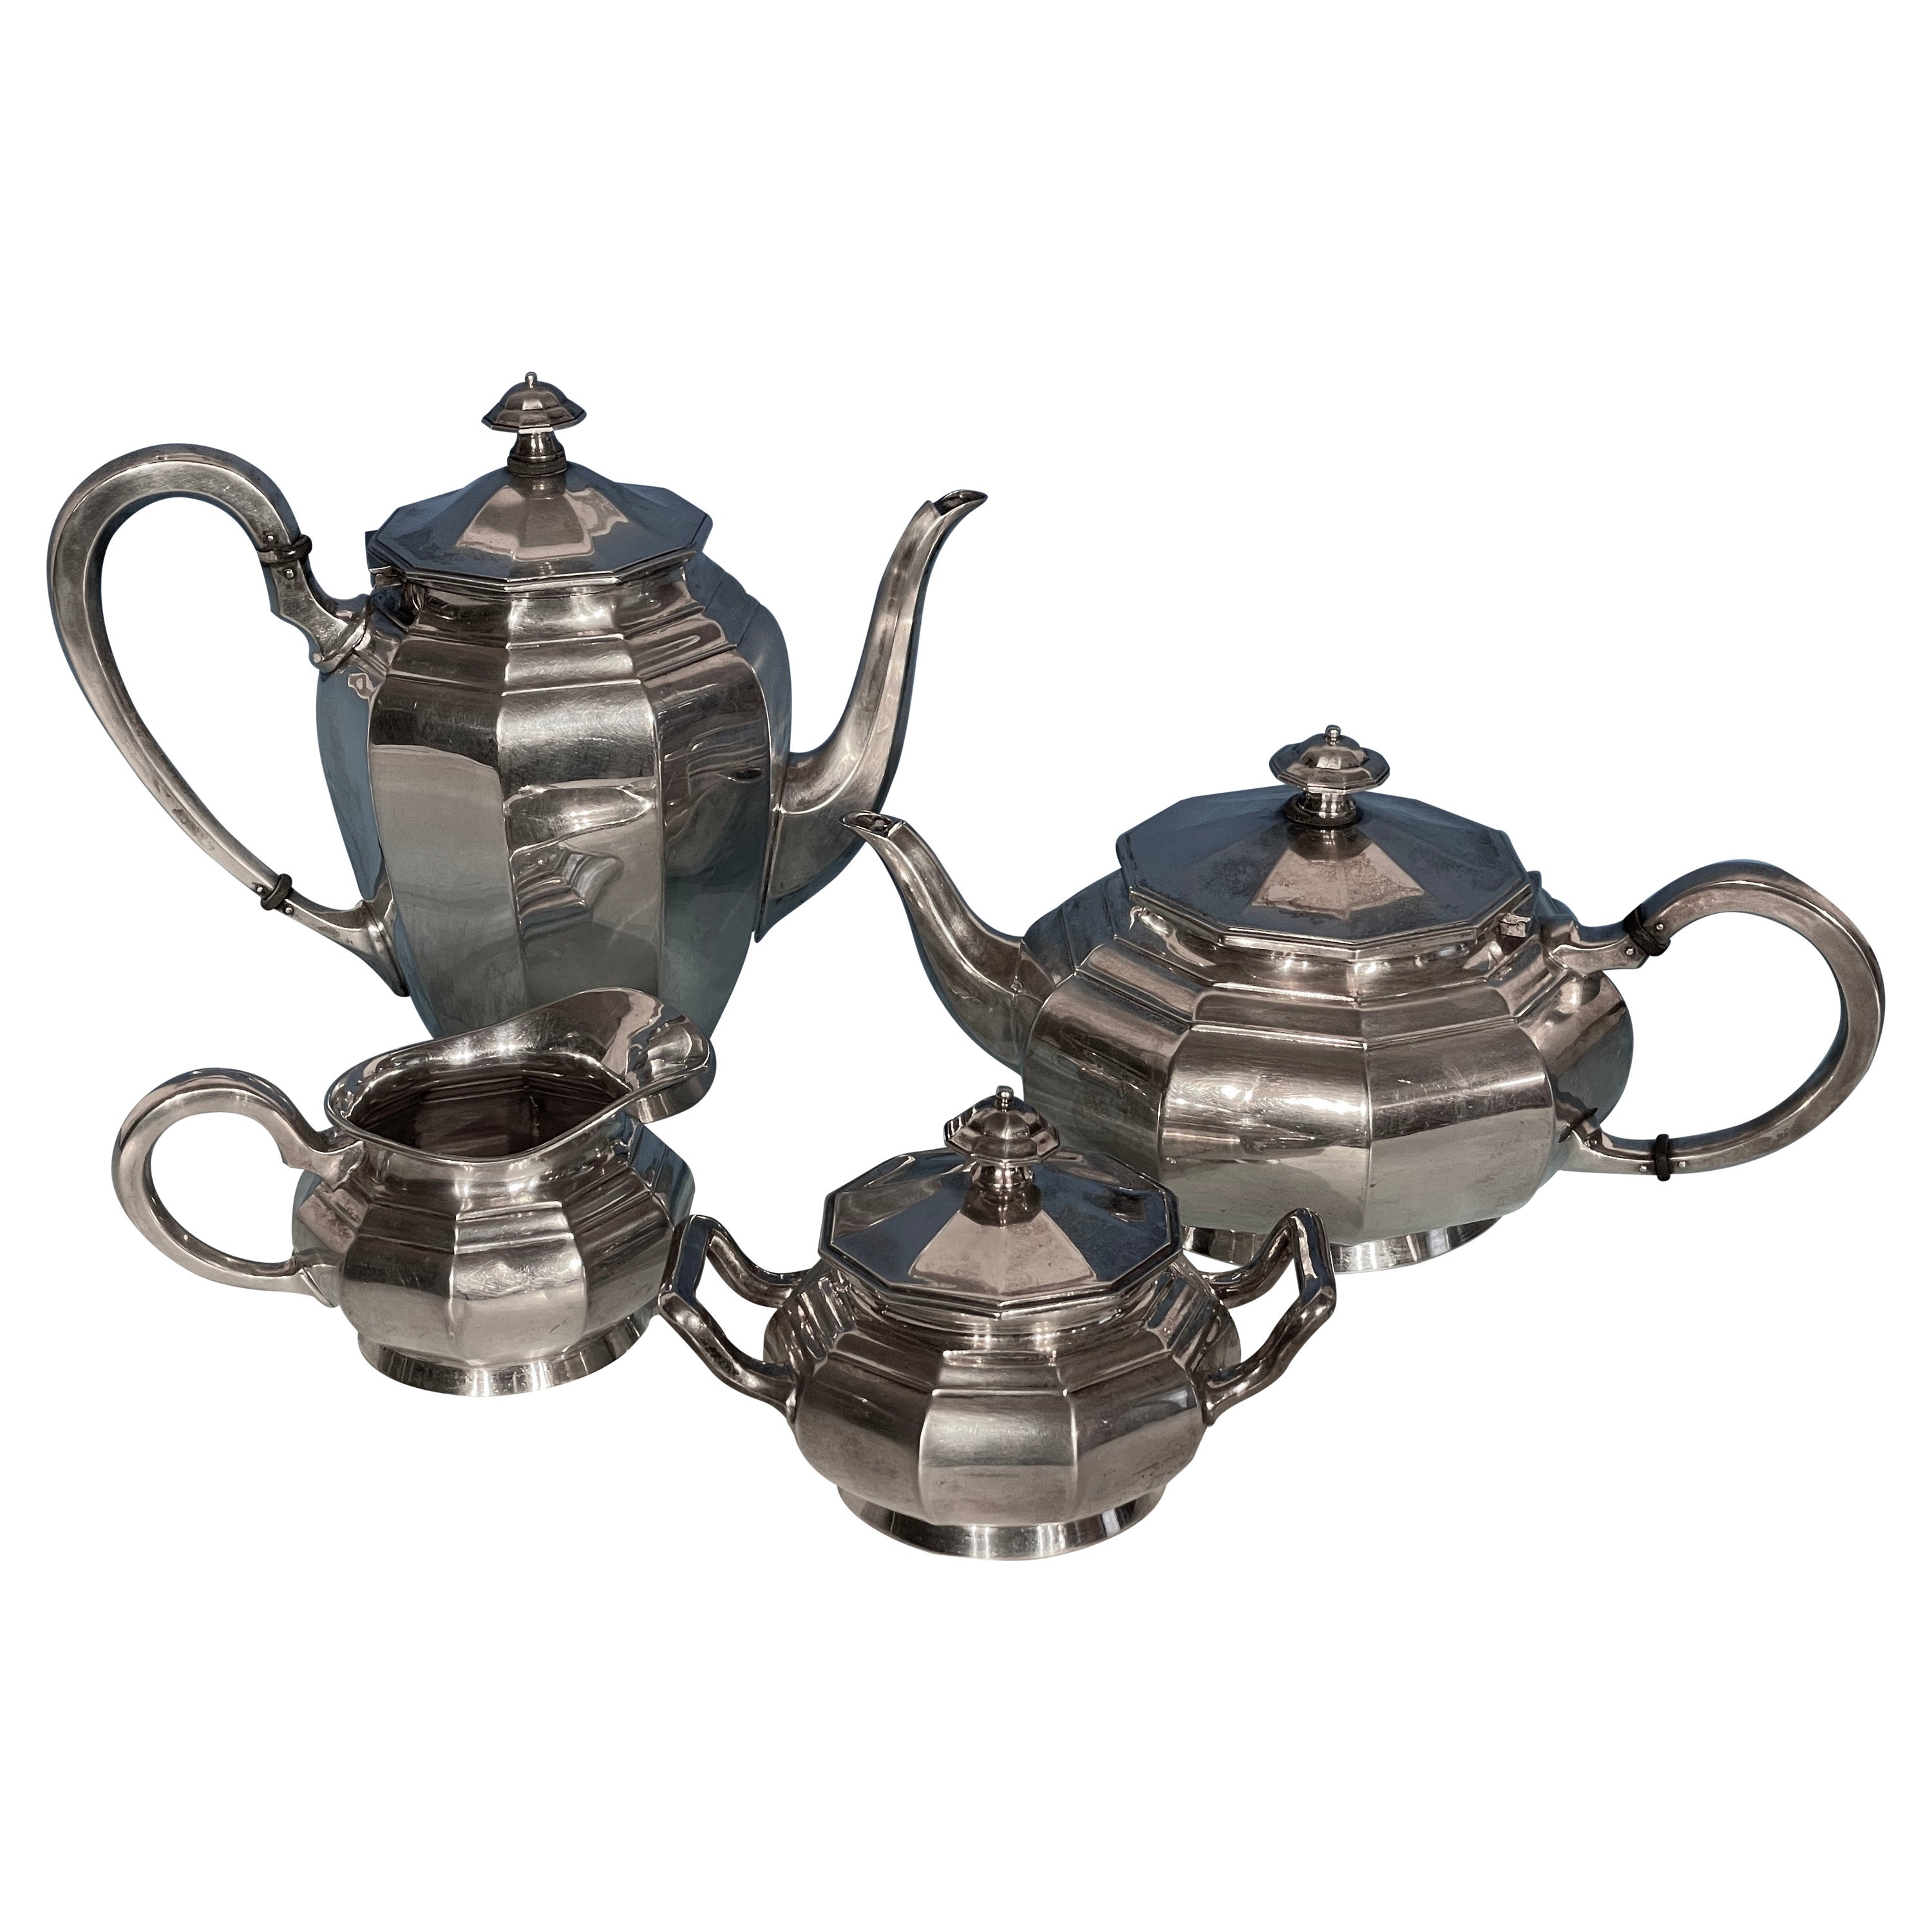 Art Deco Coffee and Tea Set, Silver 835, Germany, 1900-20